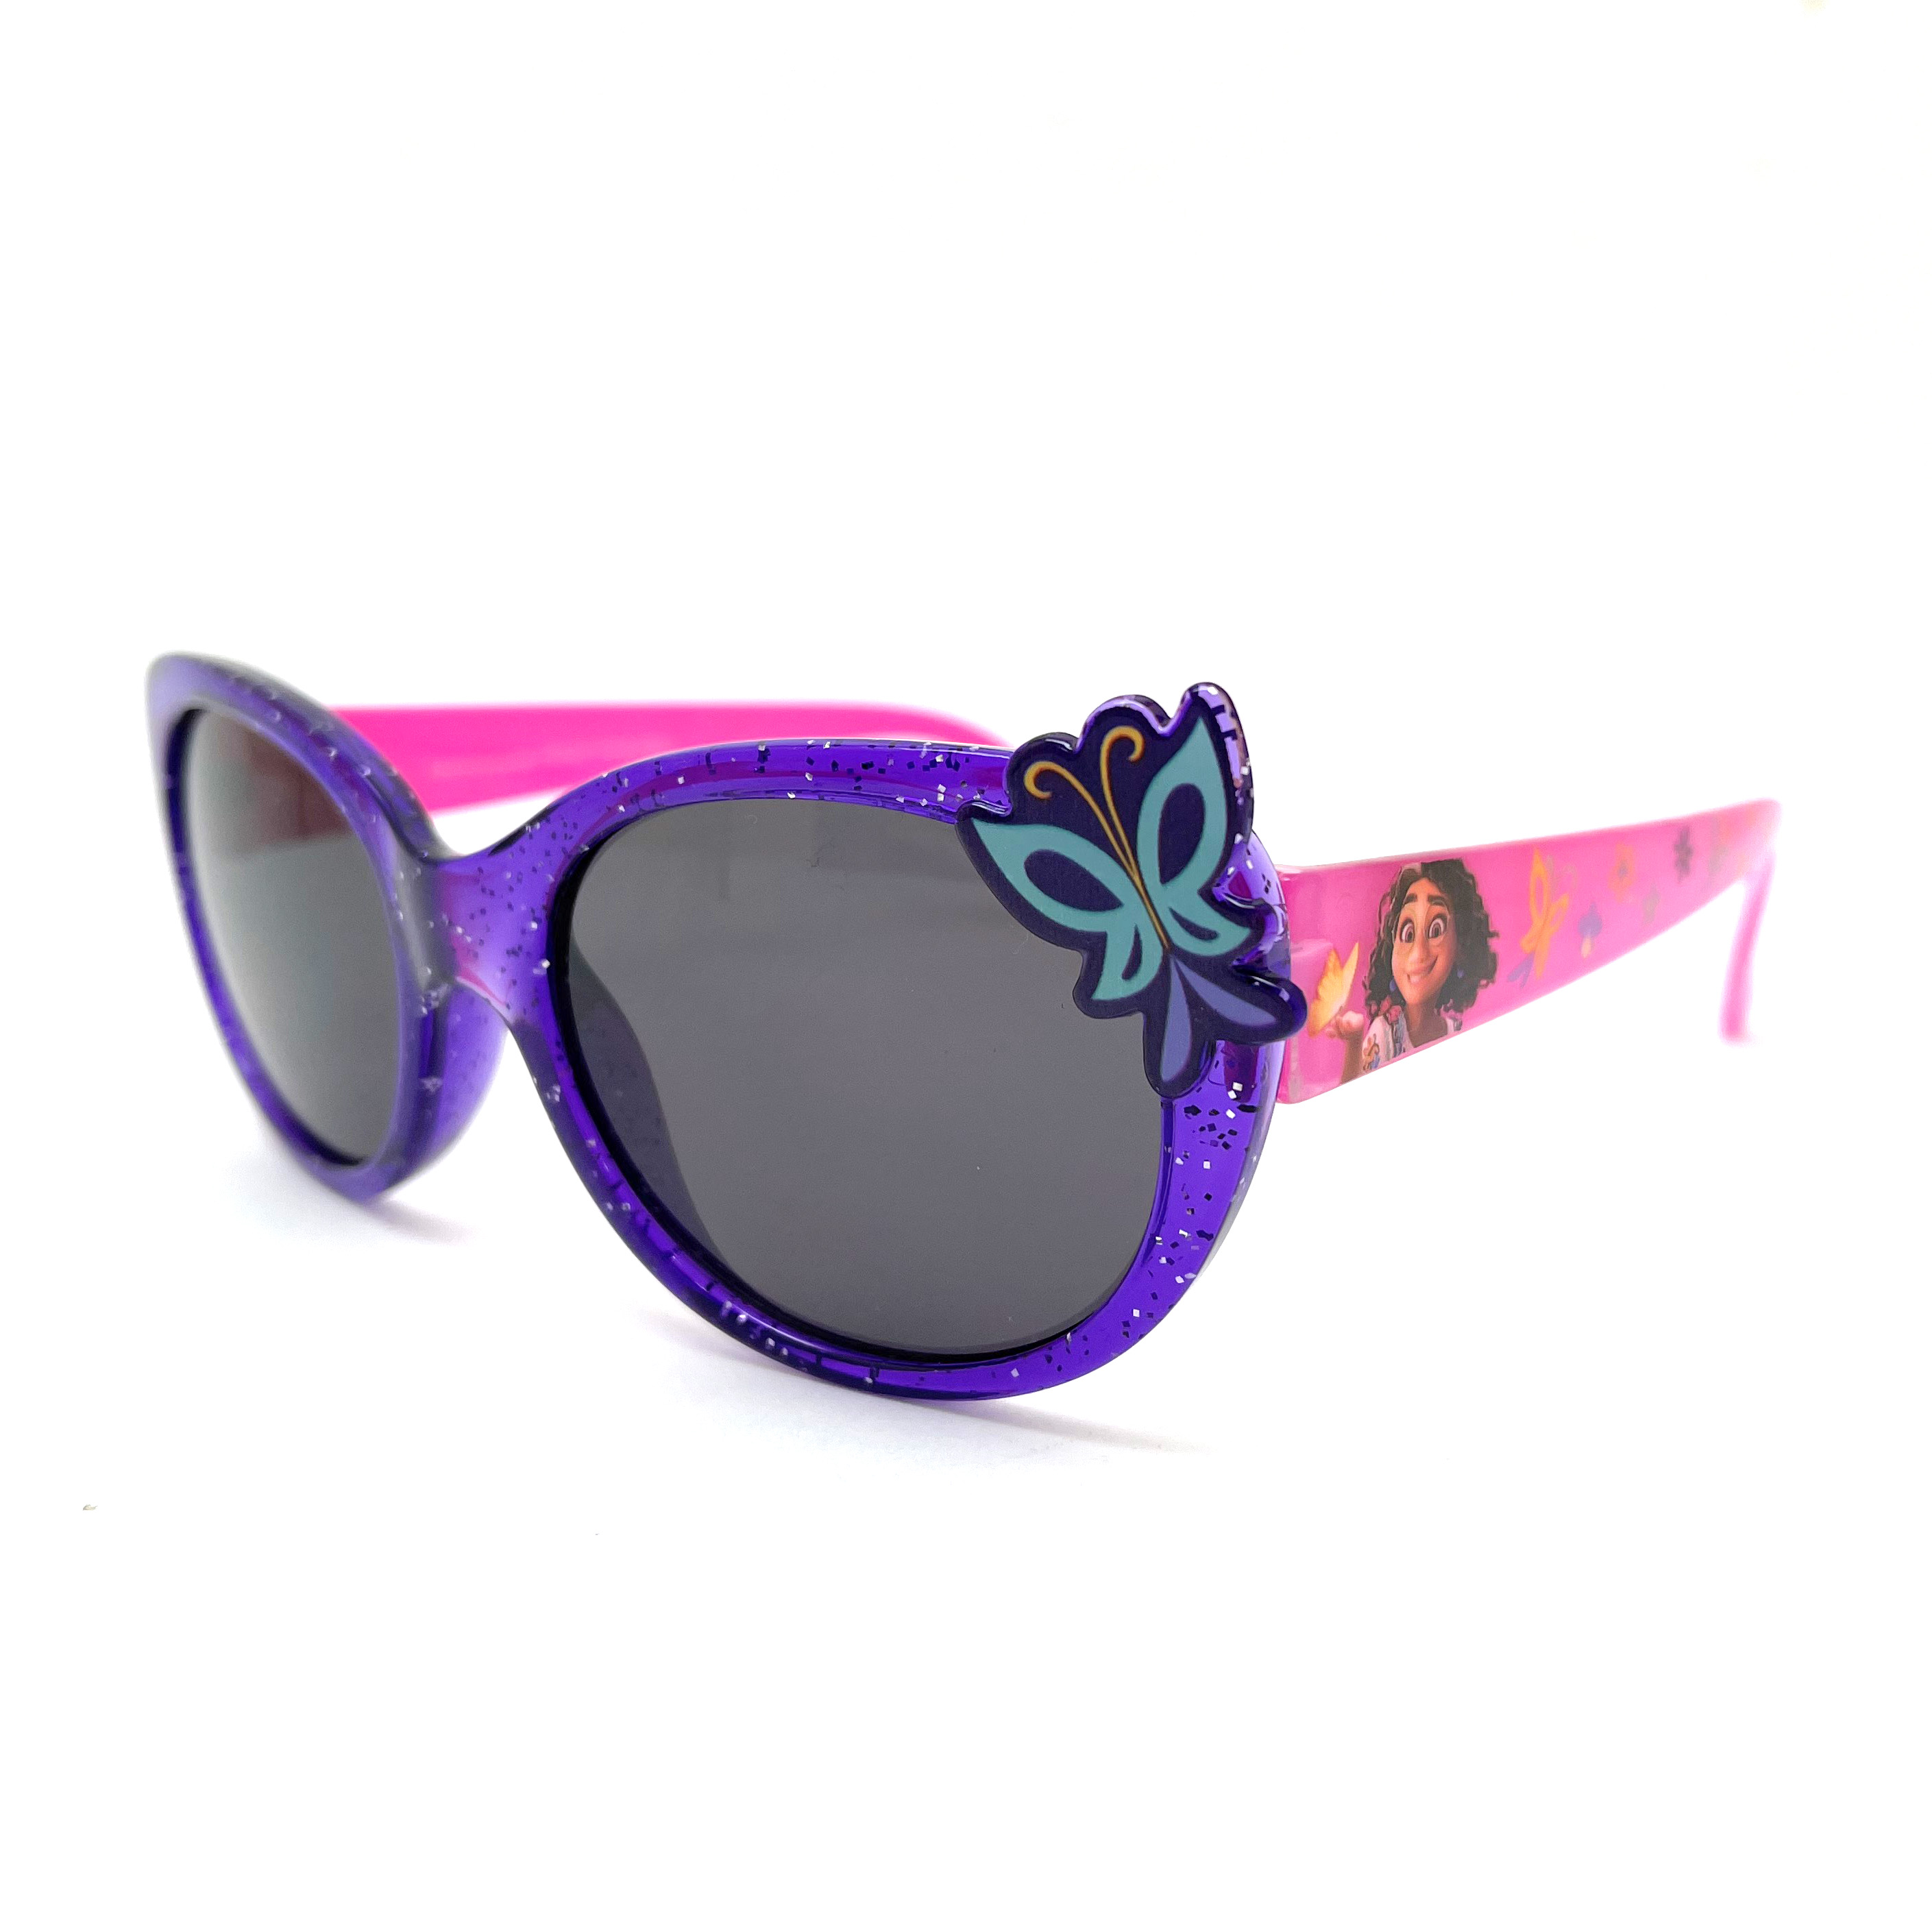 Disney Encanto Girl's Fashion Sunglasses - image 2 of 4